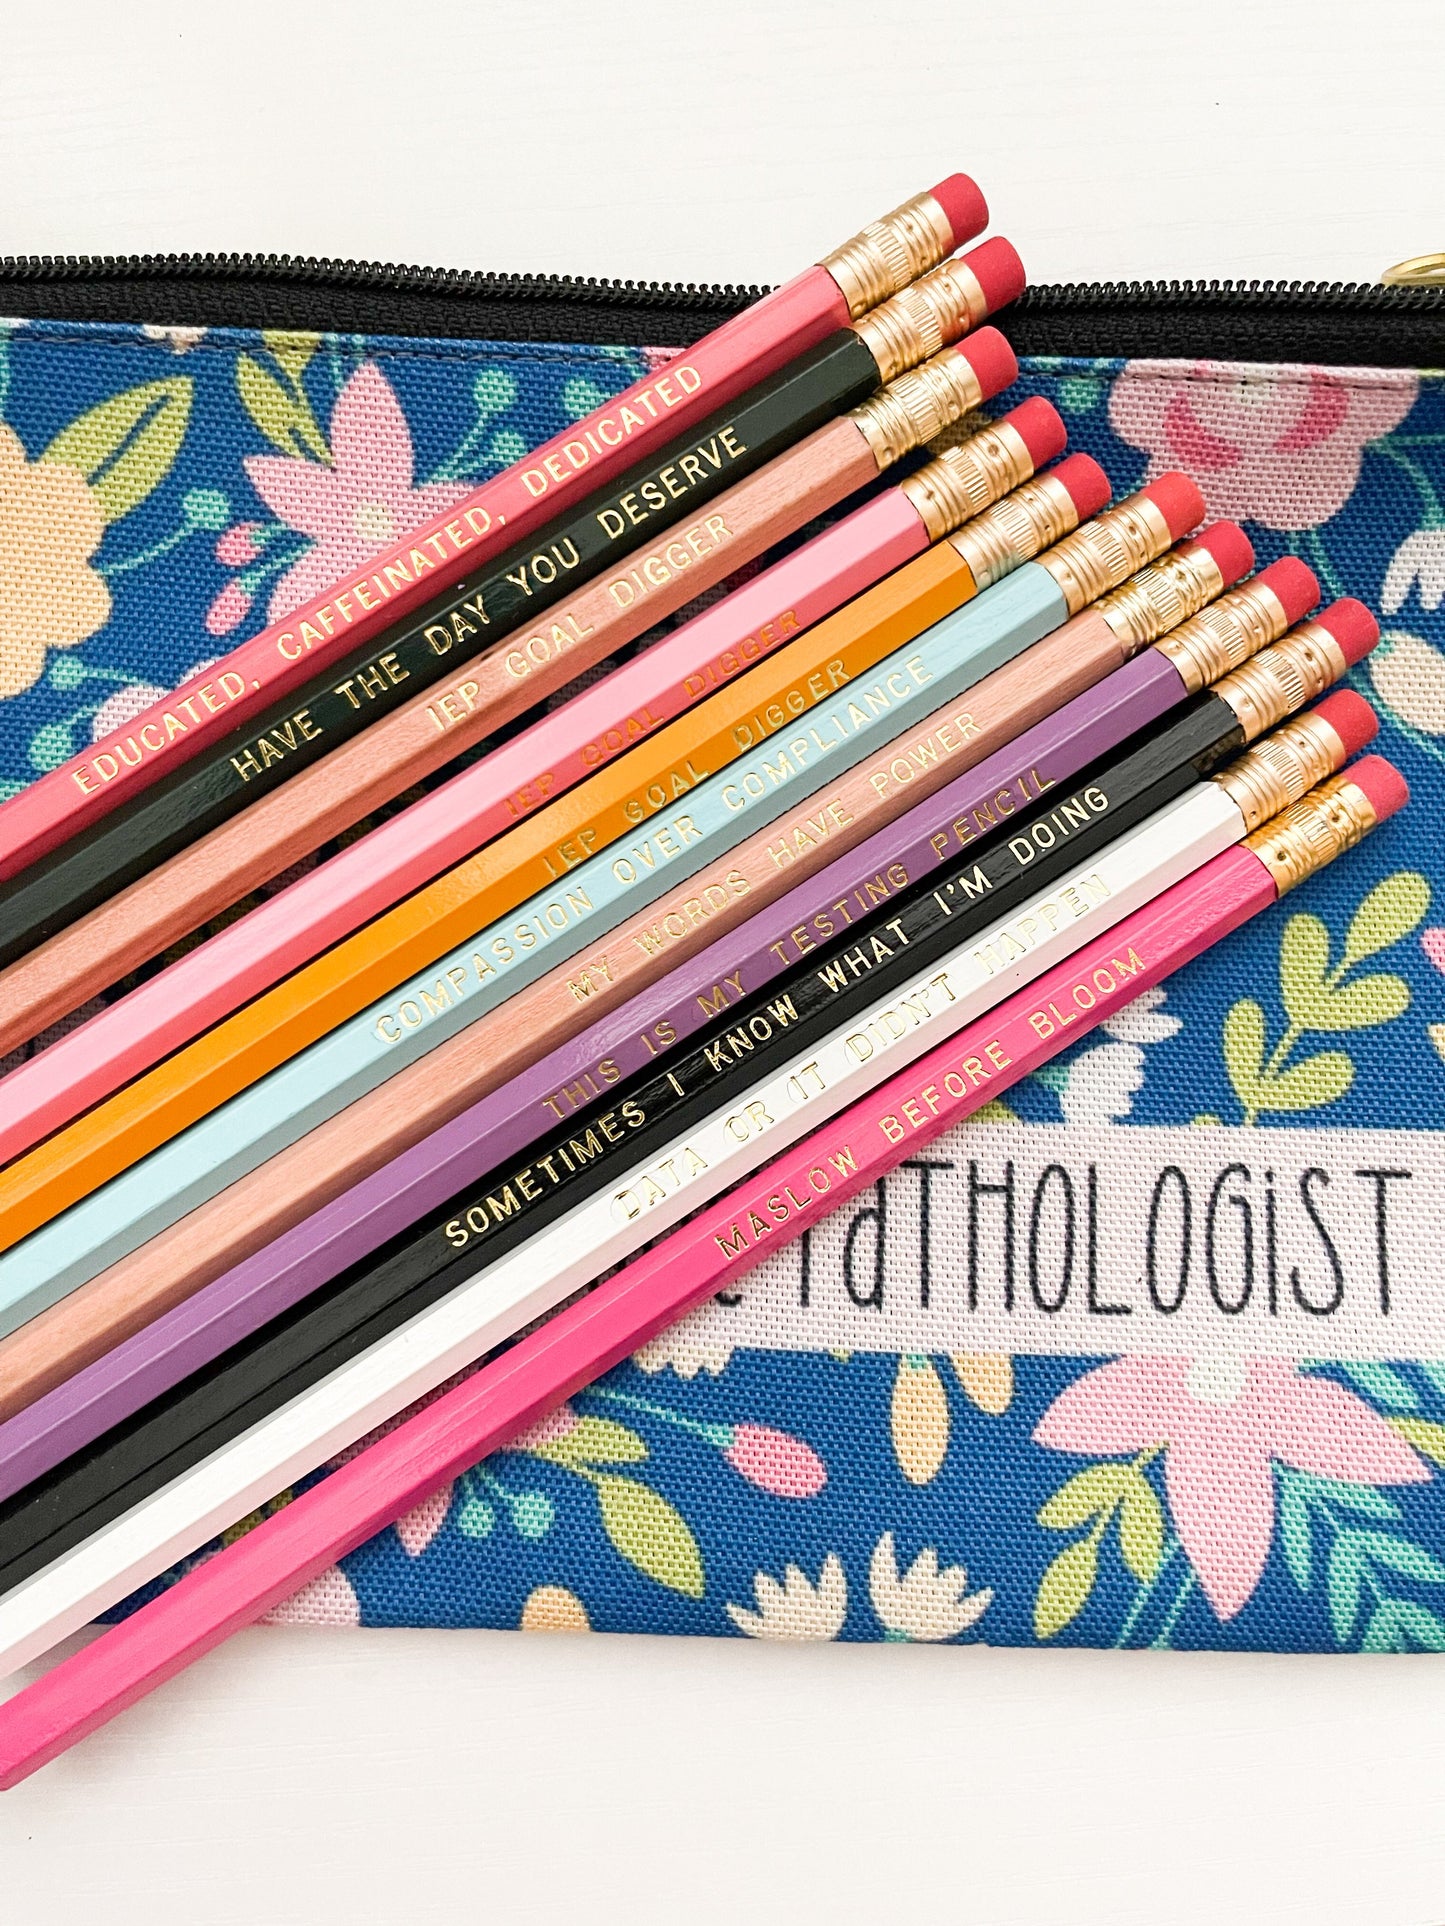 The Ultimate Pencil Set